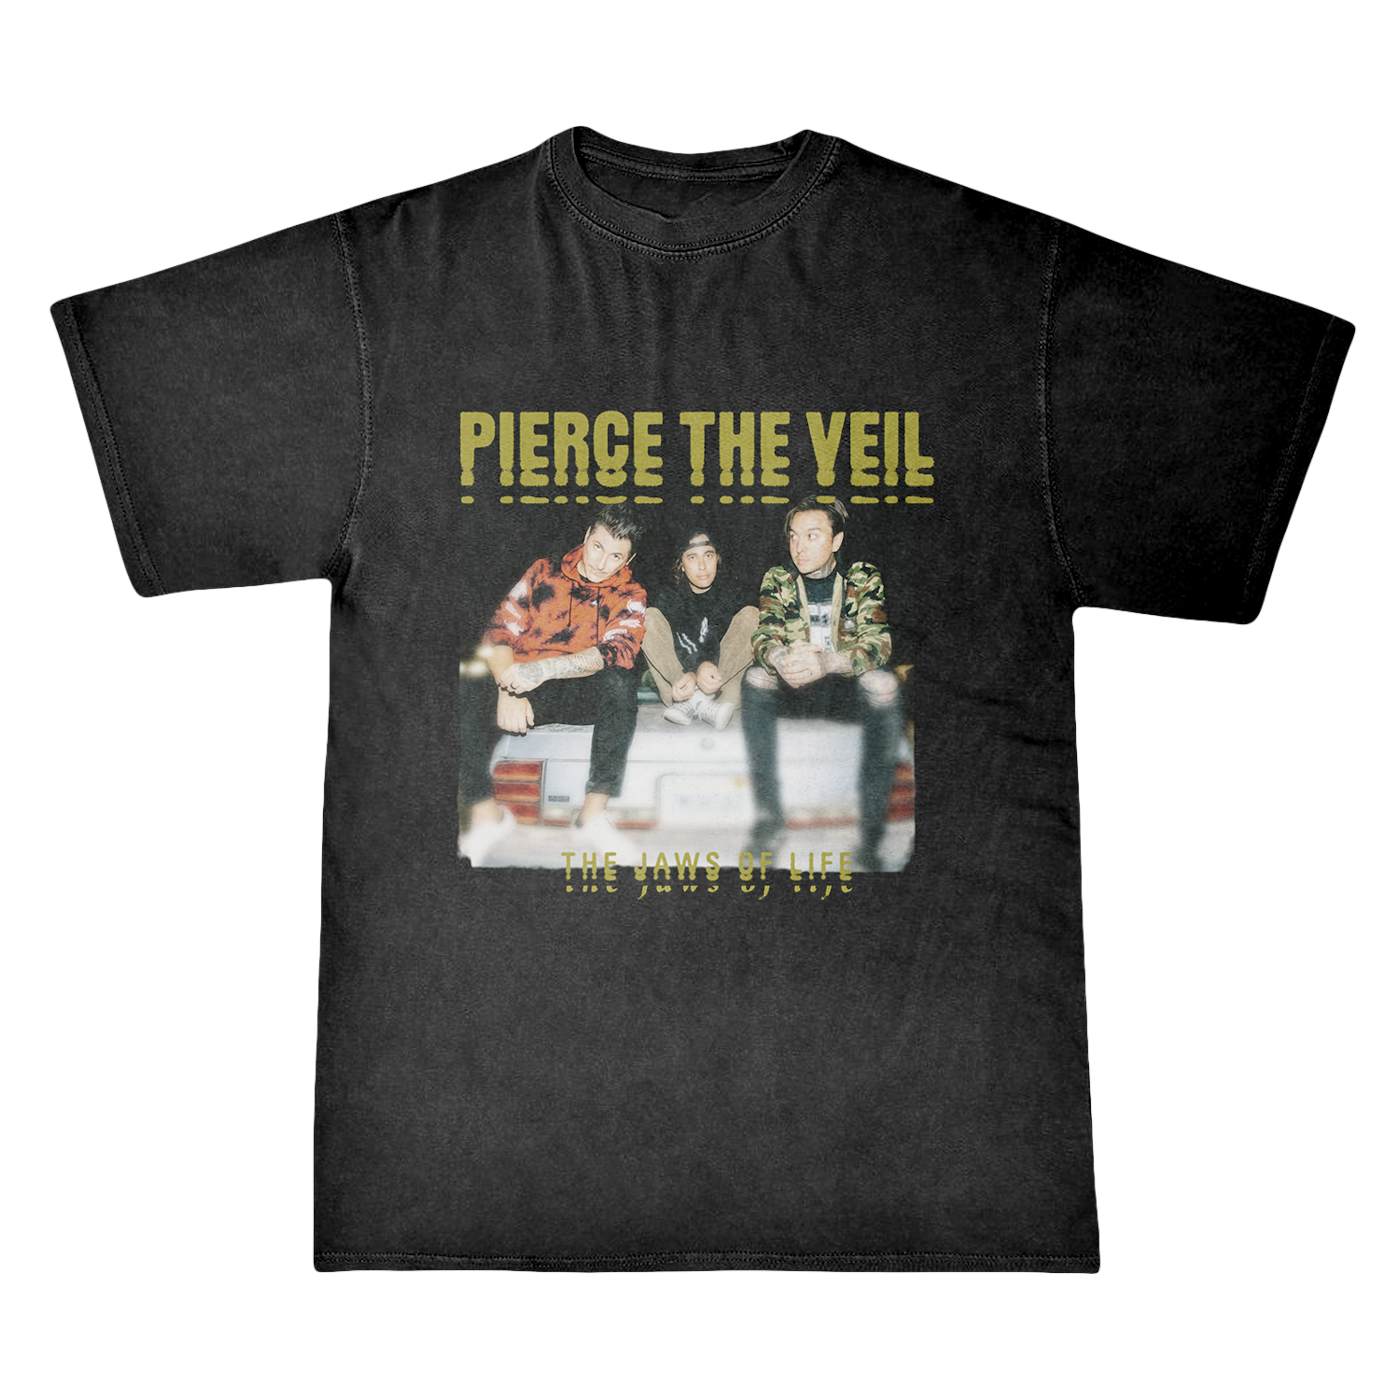 Pierce The Veil "Jaws Photo" T-Shirt